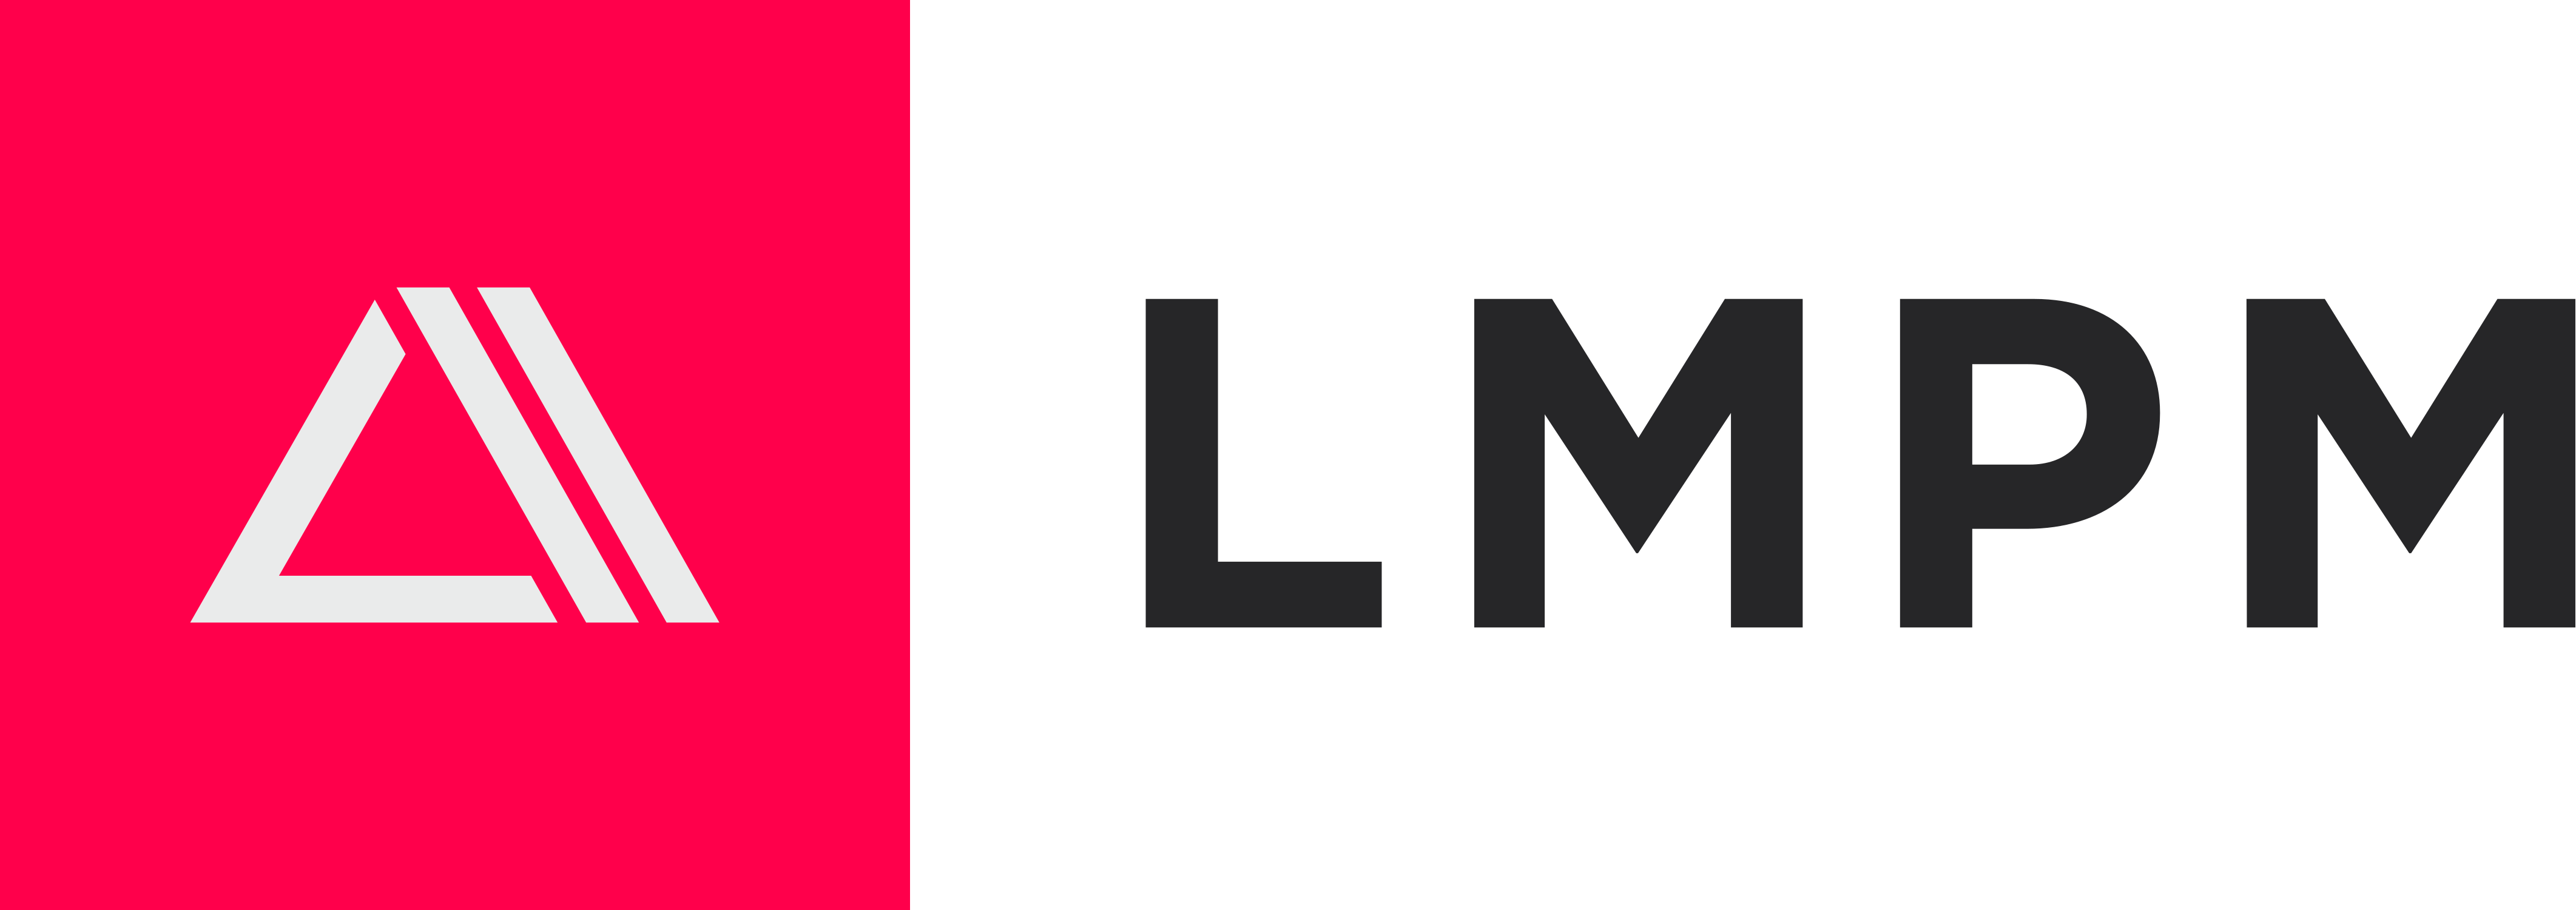 2021-05-17-LMPM-Logo-pixel-perfect-vFinal